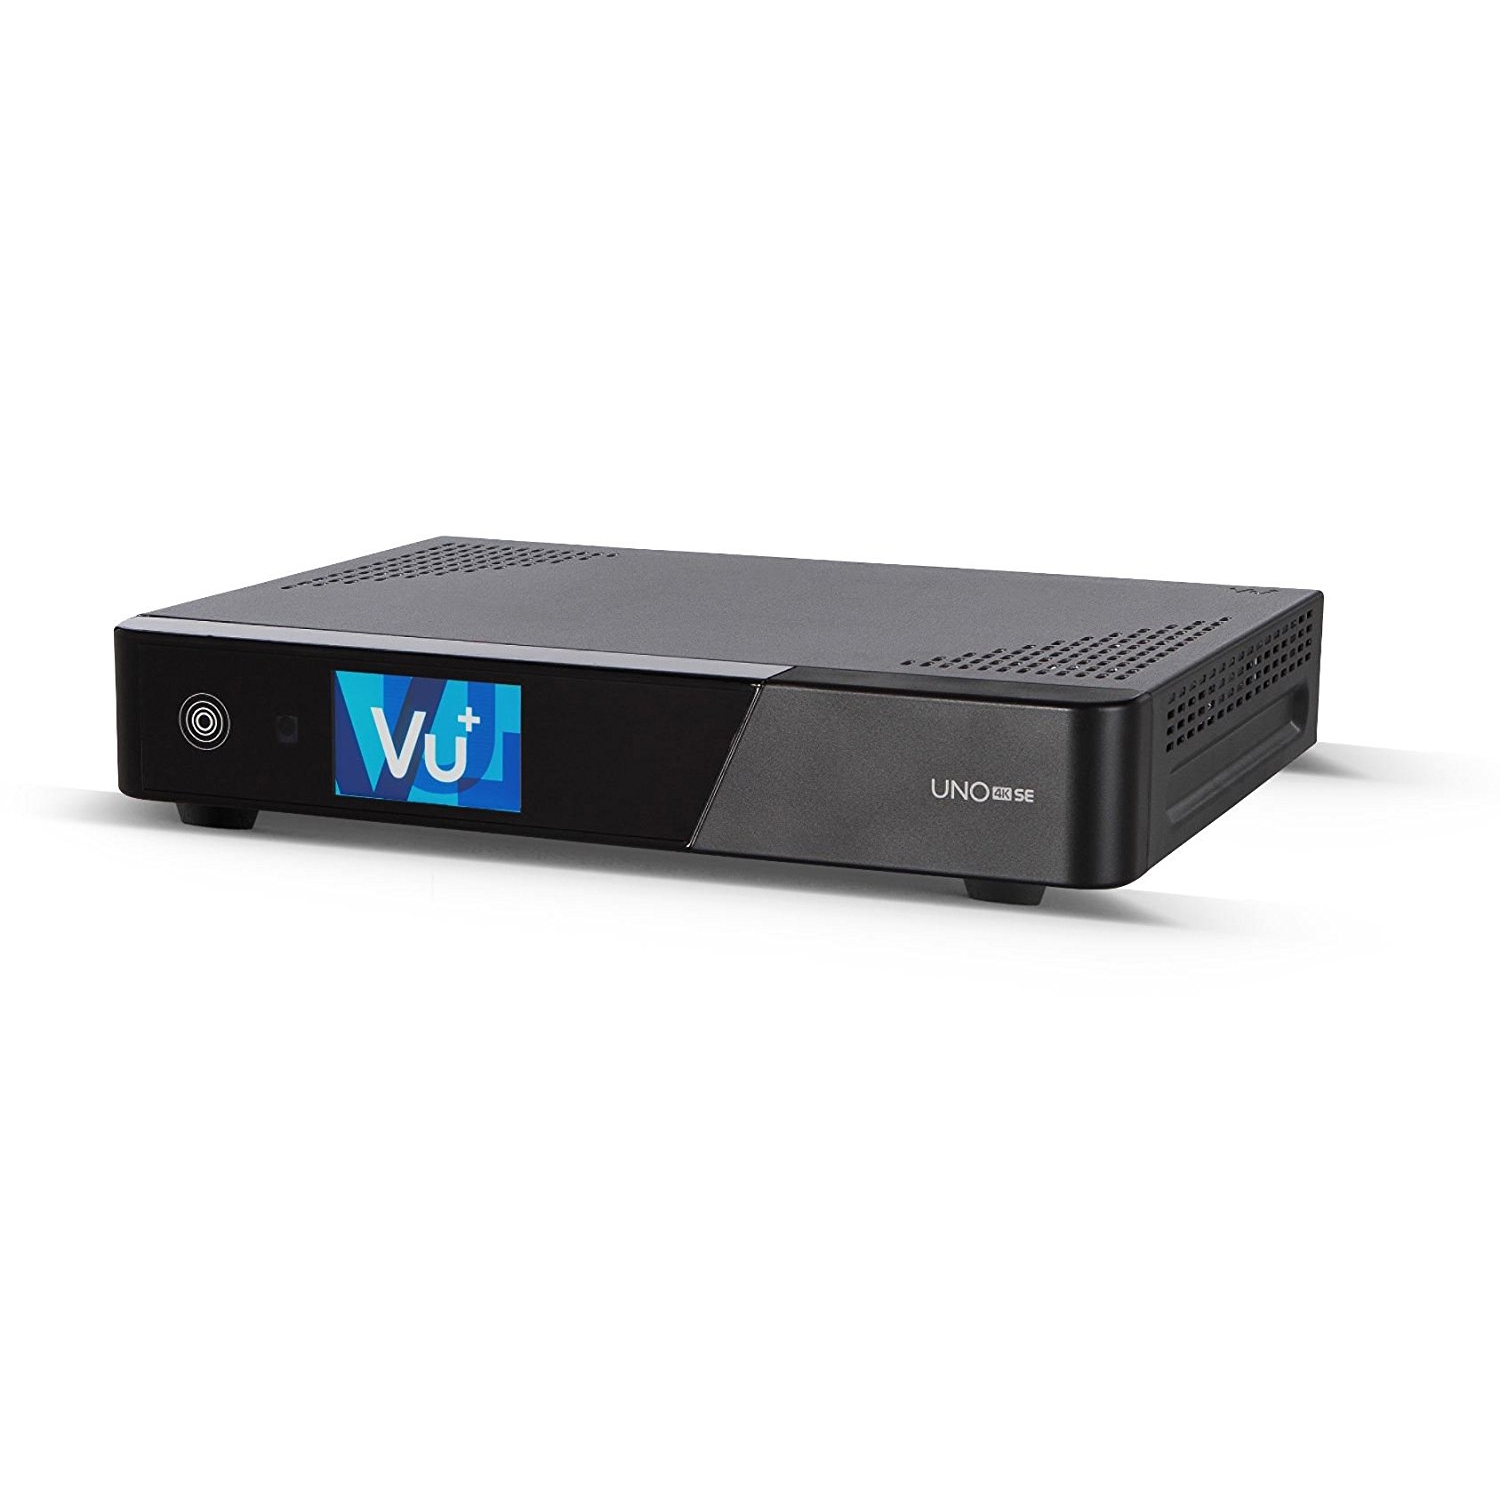 Uno FBC VU+ SE (PVR-Funktion, Tuner, DVB-S2, Receiver Sat Schwarz) Twin DVB-S2X 4K 2TB